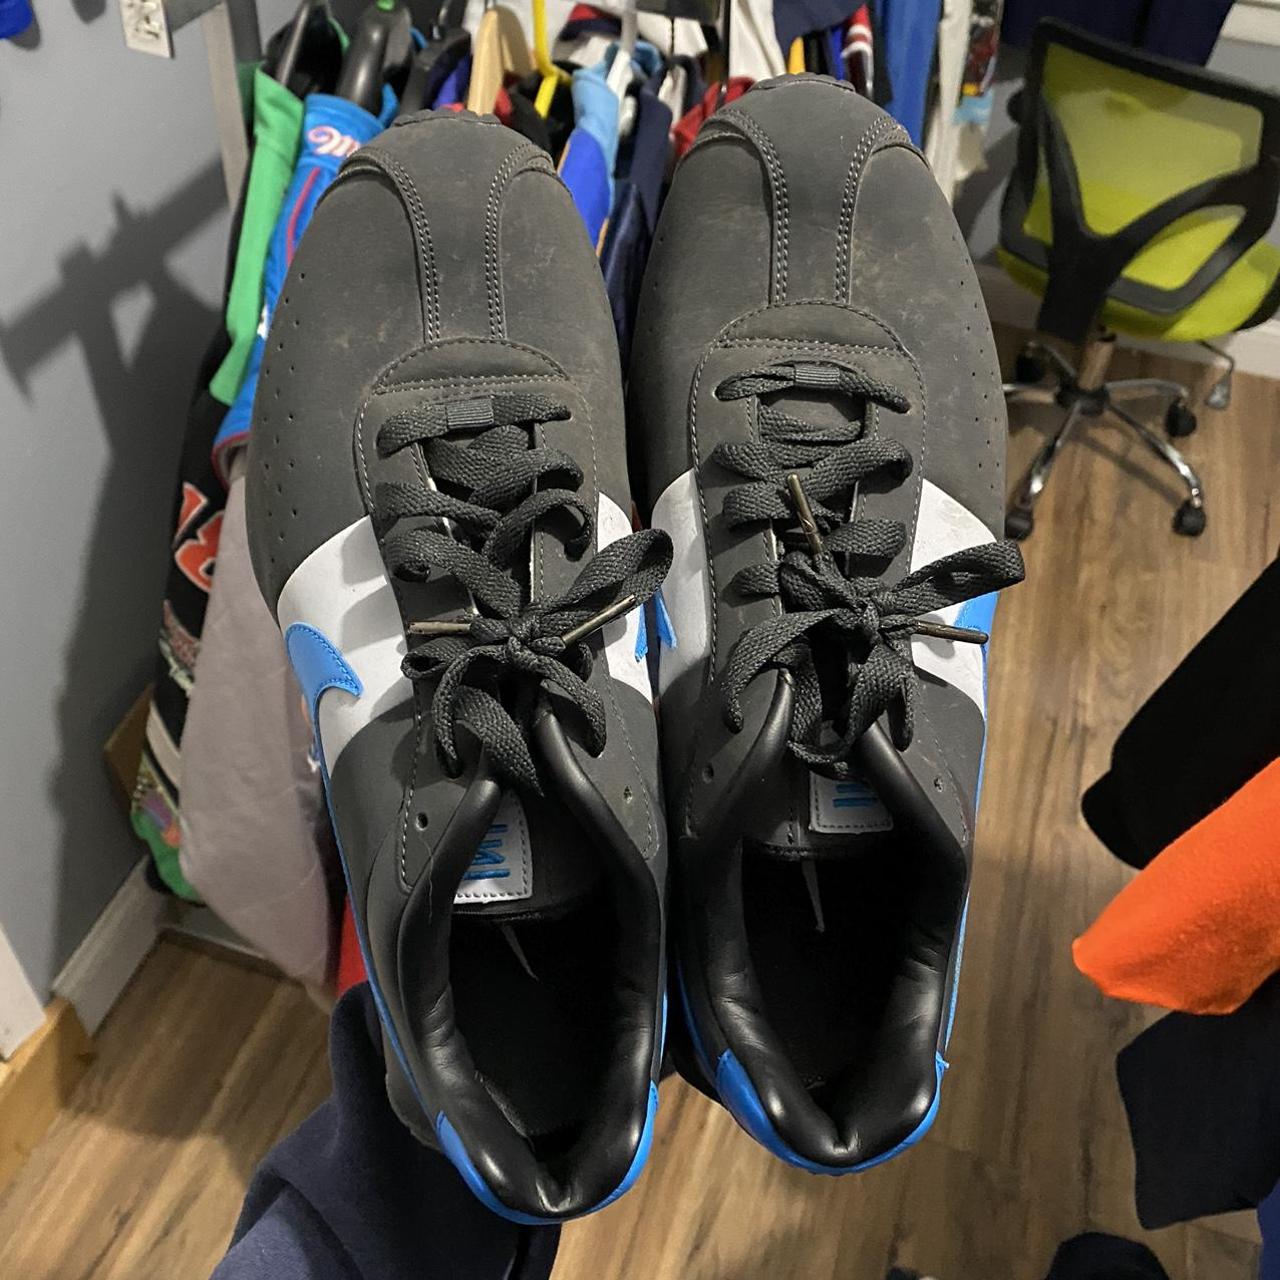 Product Image 4 - Nike Shox Coal/Blue Size 11

These